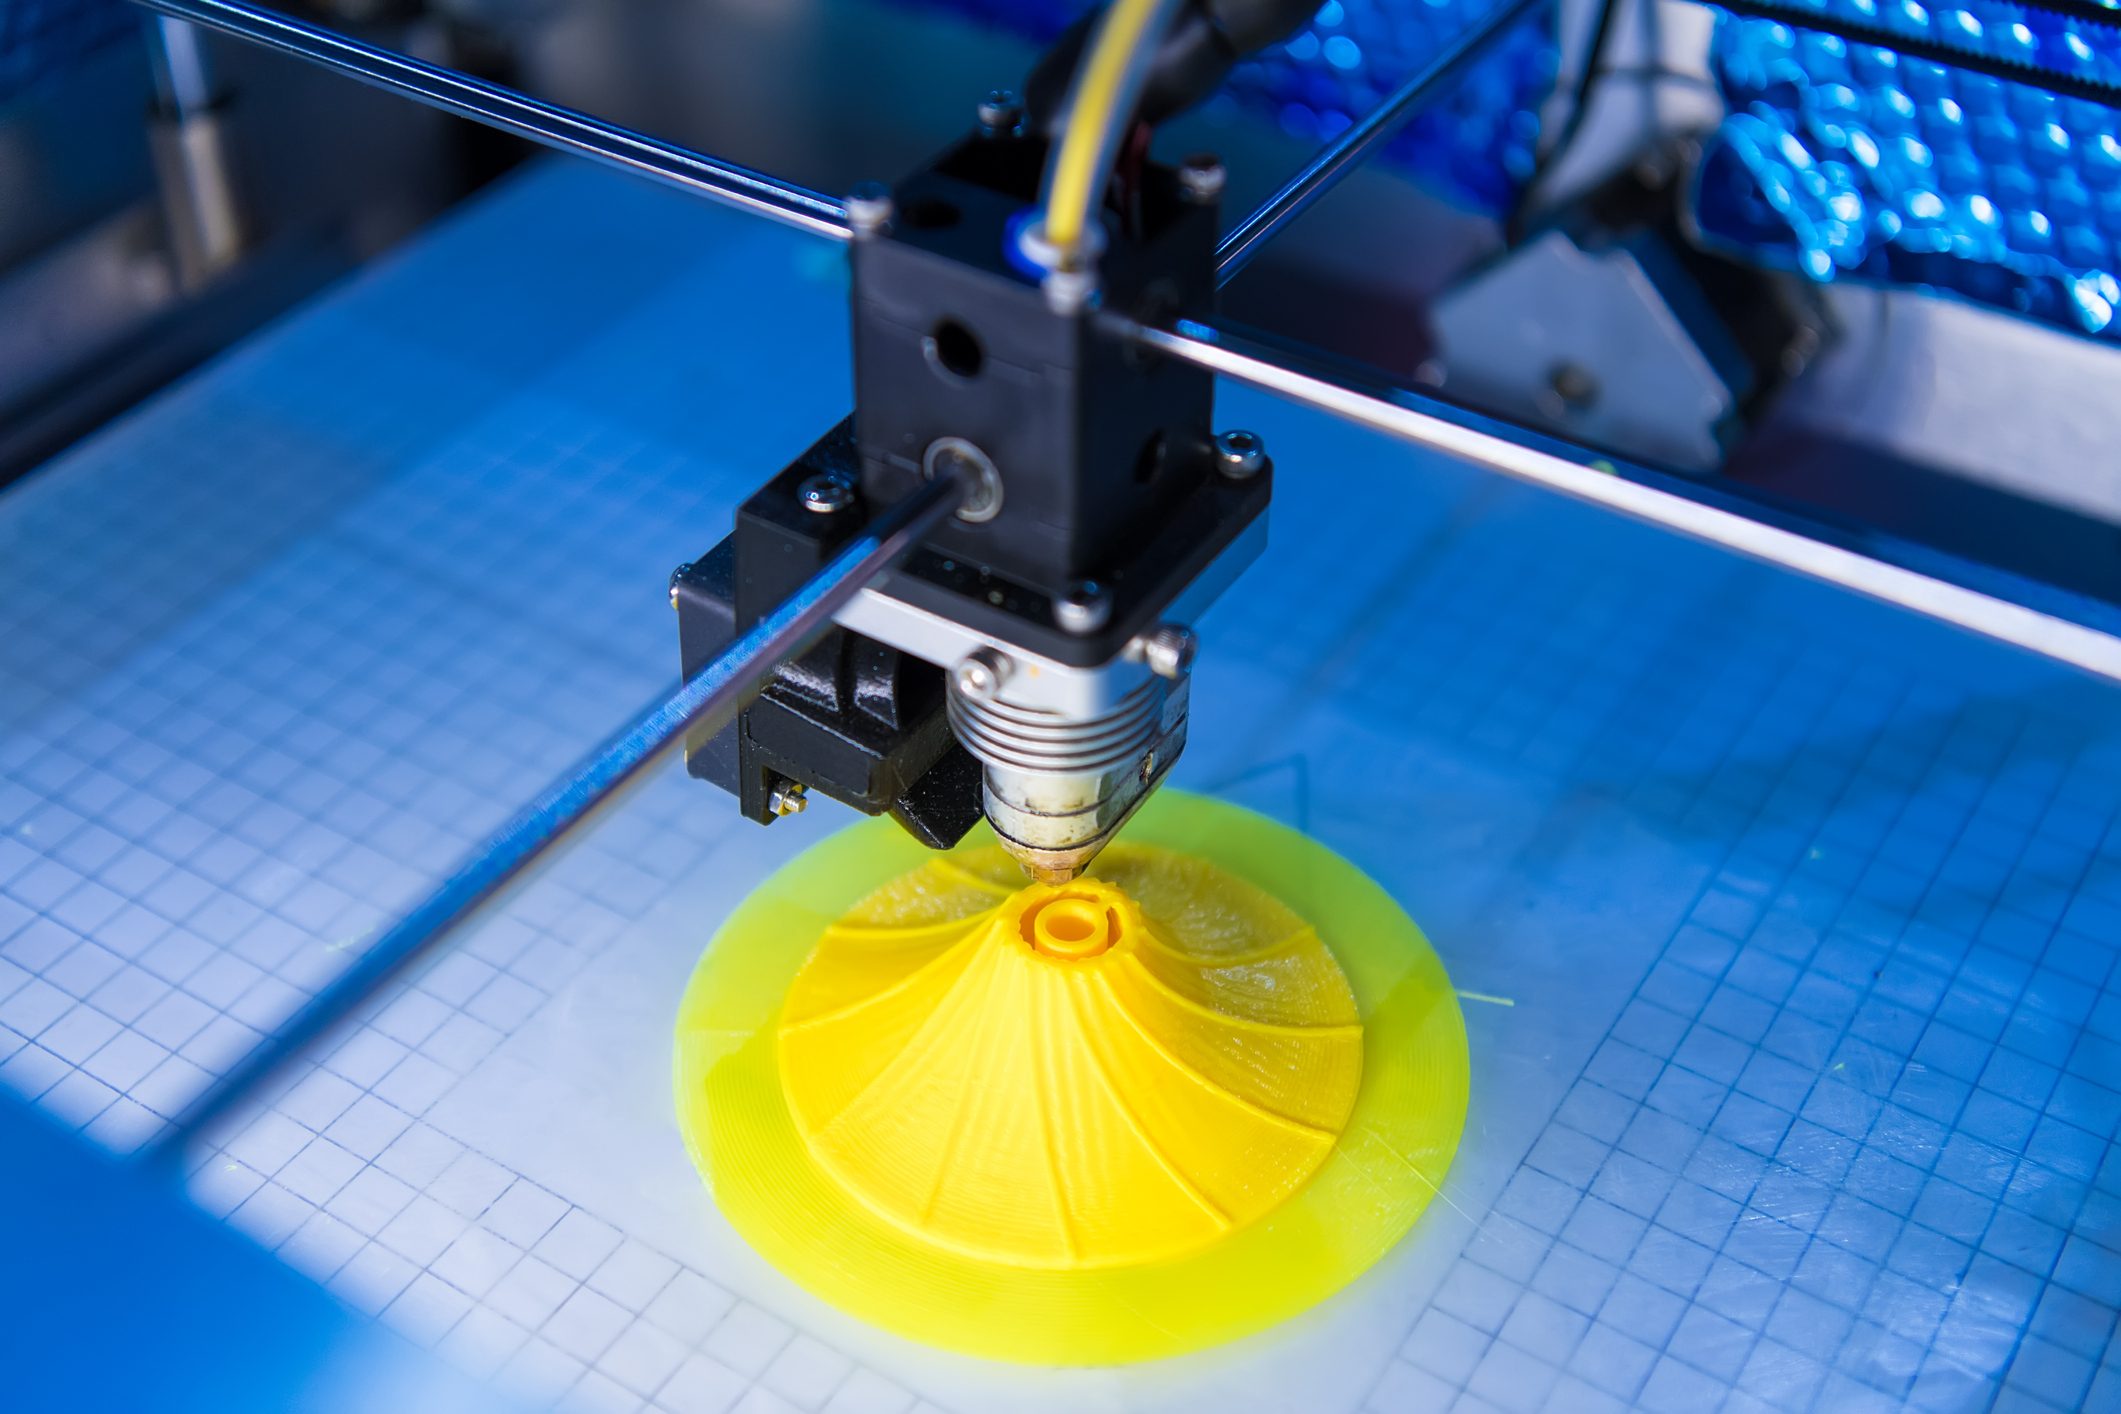 3D Printing Machine printing a yellow swirl shape